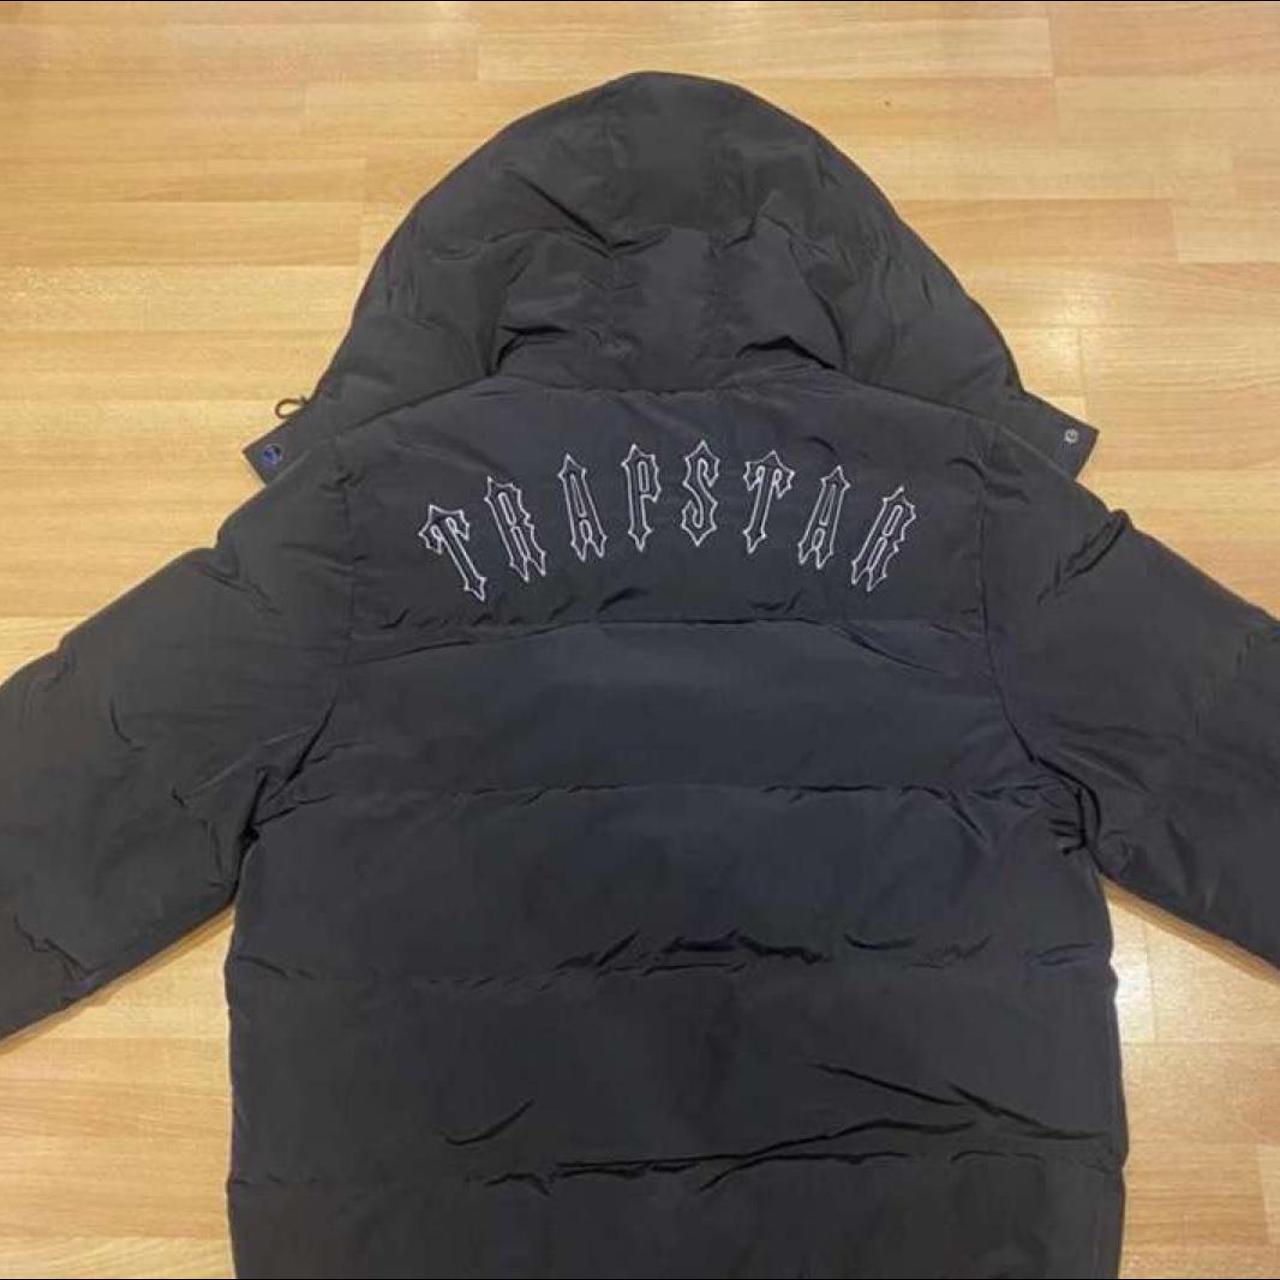 Black trapstar coat size large - Depop